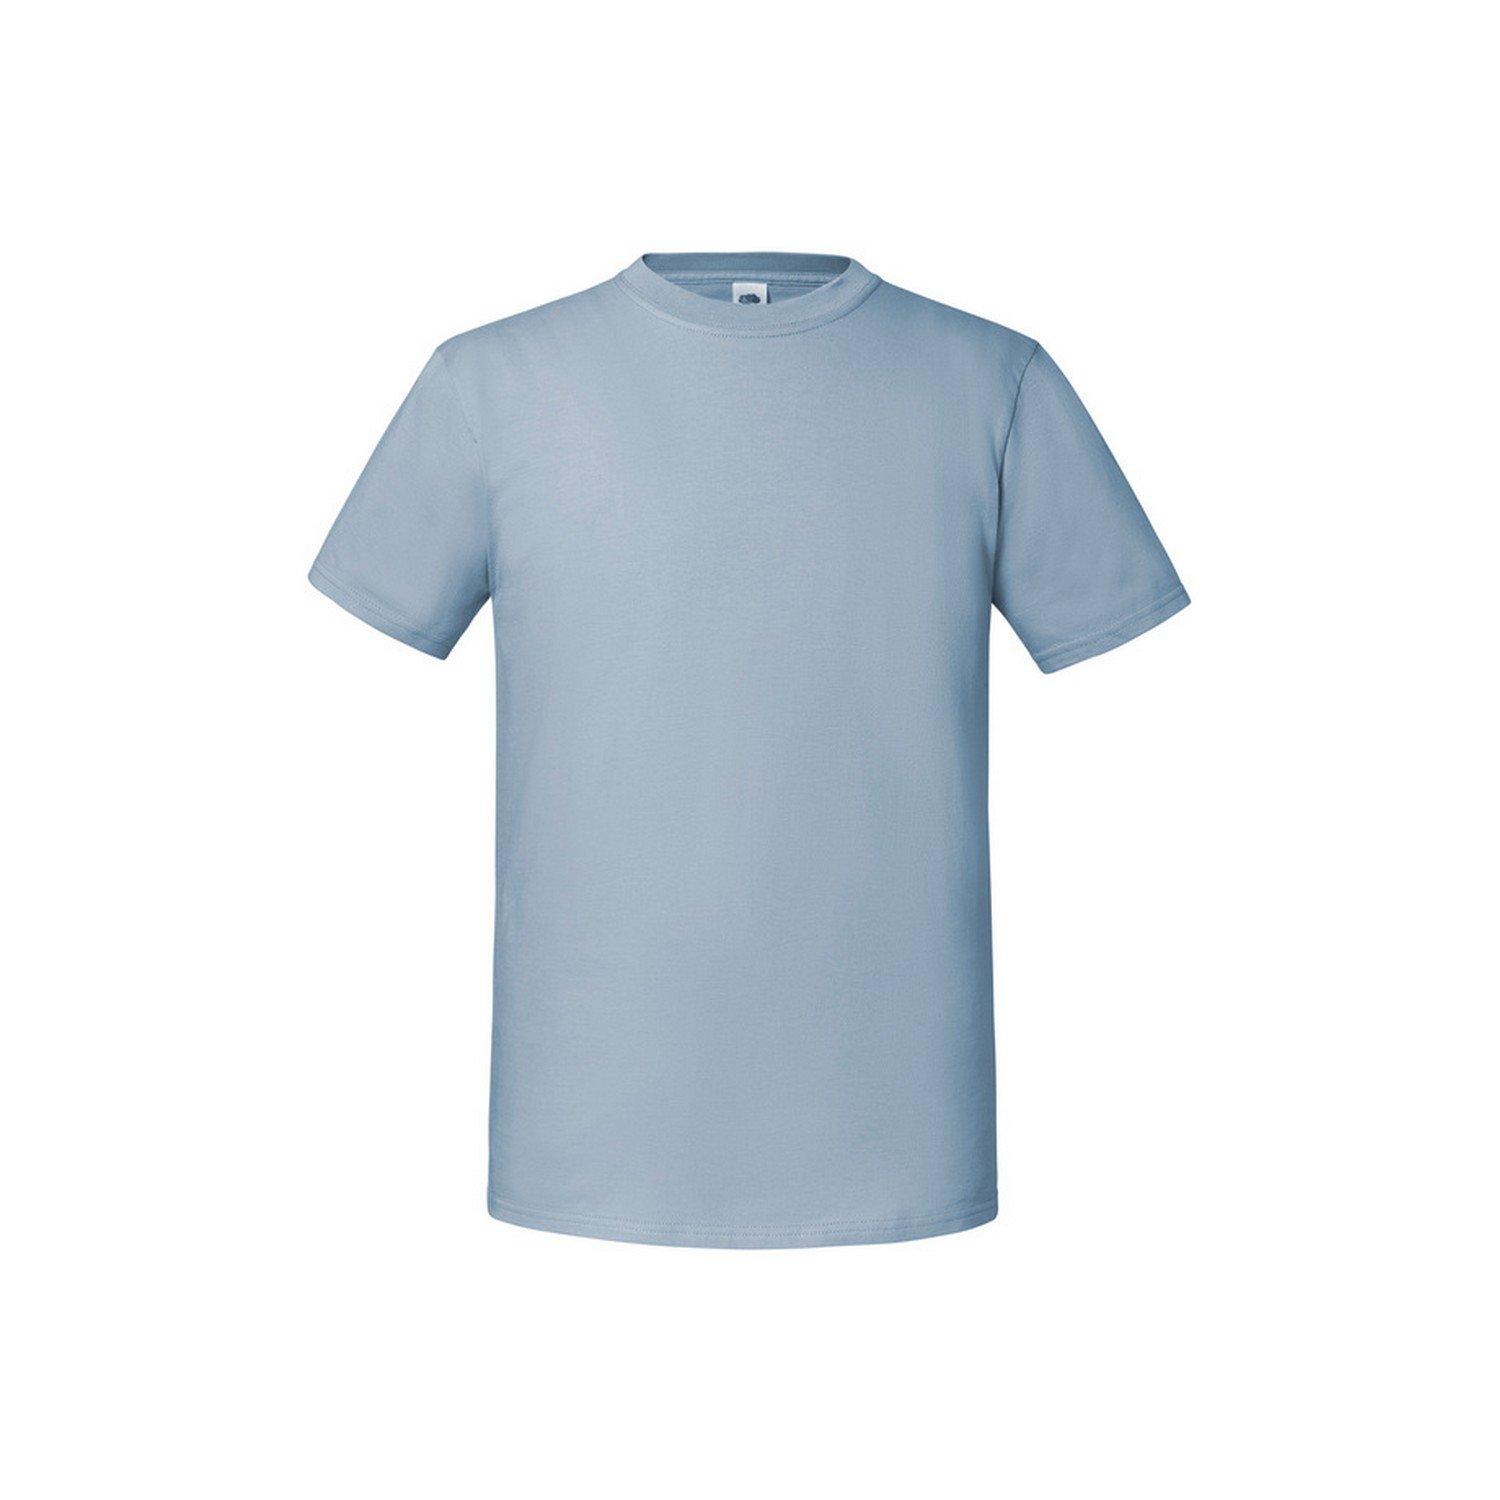 Iconic Premium Tshirt Herren Blau XL von Fruit of the Loom